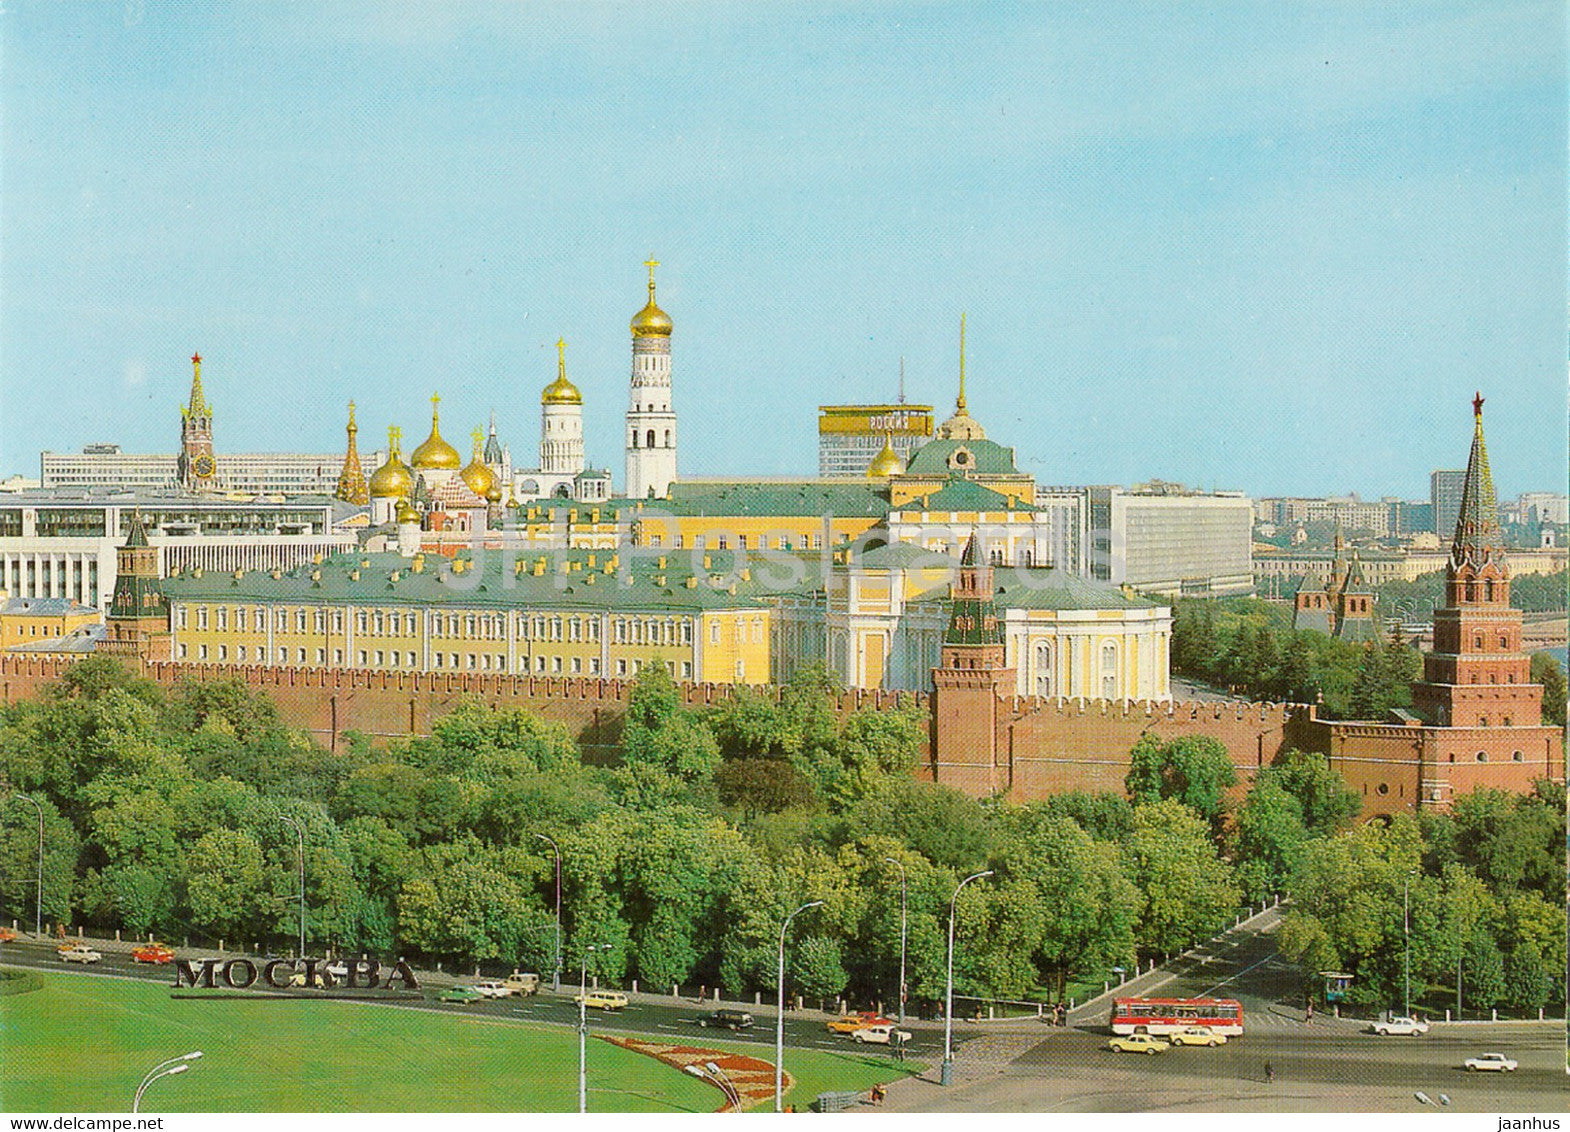 Moscow - View of the Kremlin - bus Ikarus - 1983 - Russia USSR - unused - JH Postcards